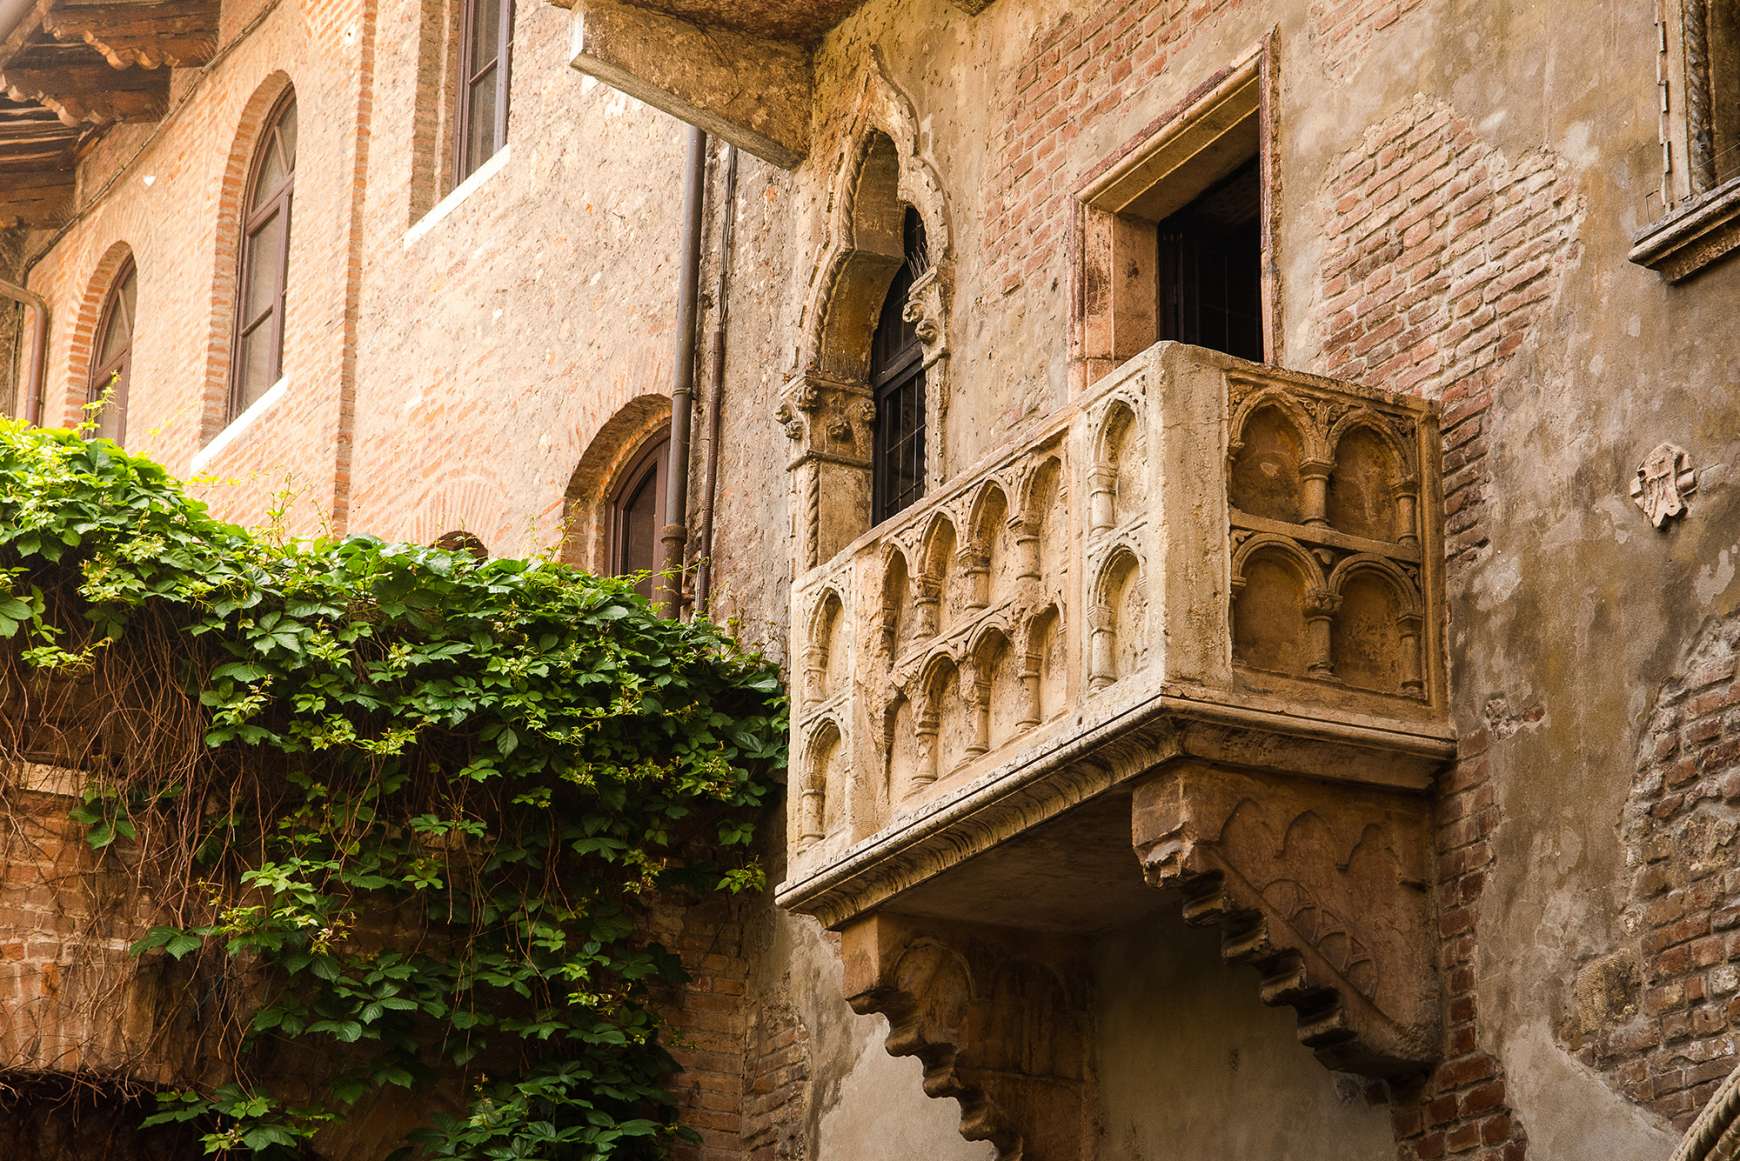 Official Capulet balcony on building in Verona, called 'Juliet balcony'